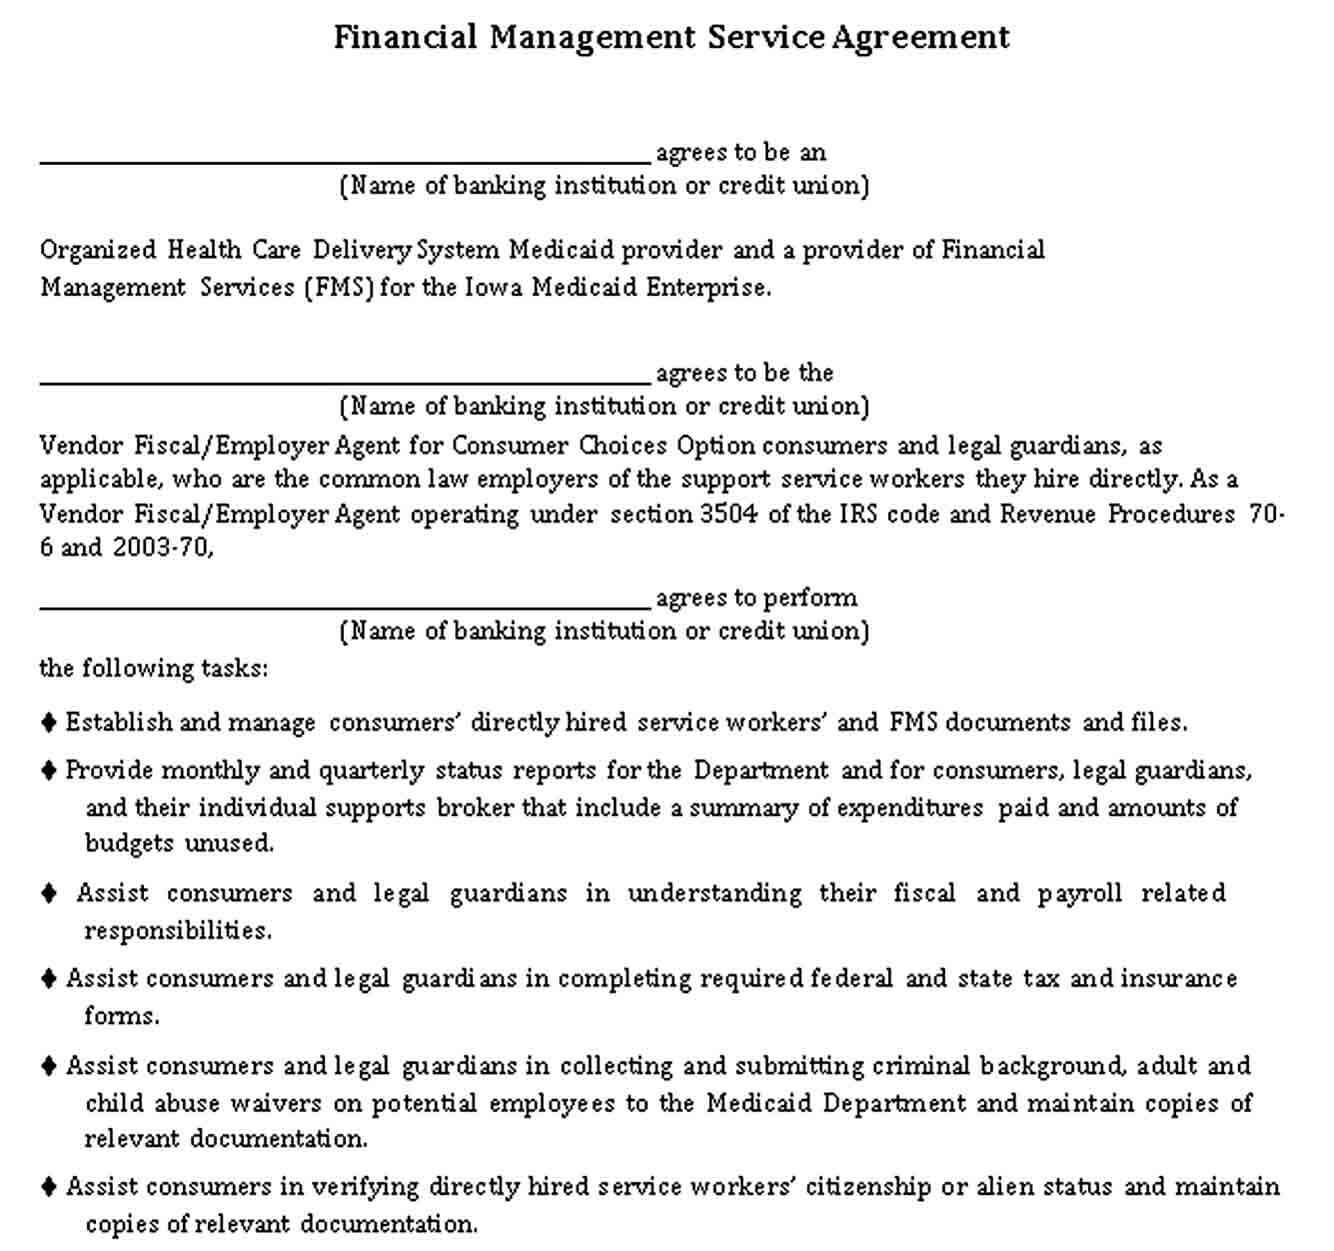 Sample Financial Management Service Agreement